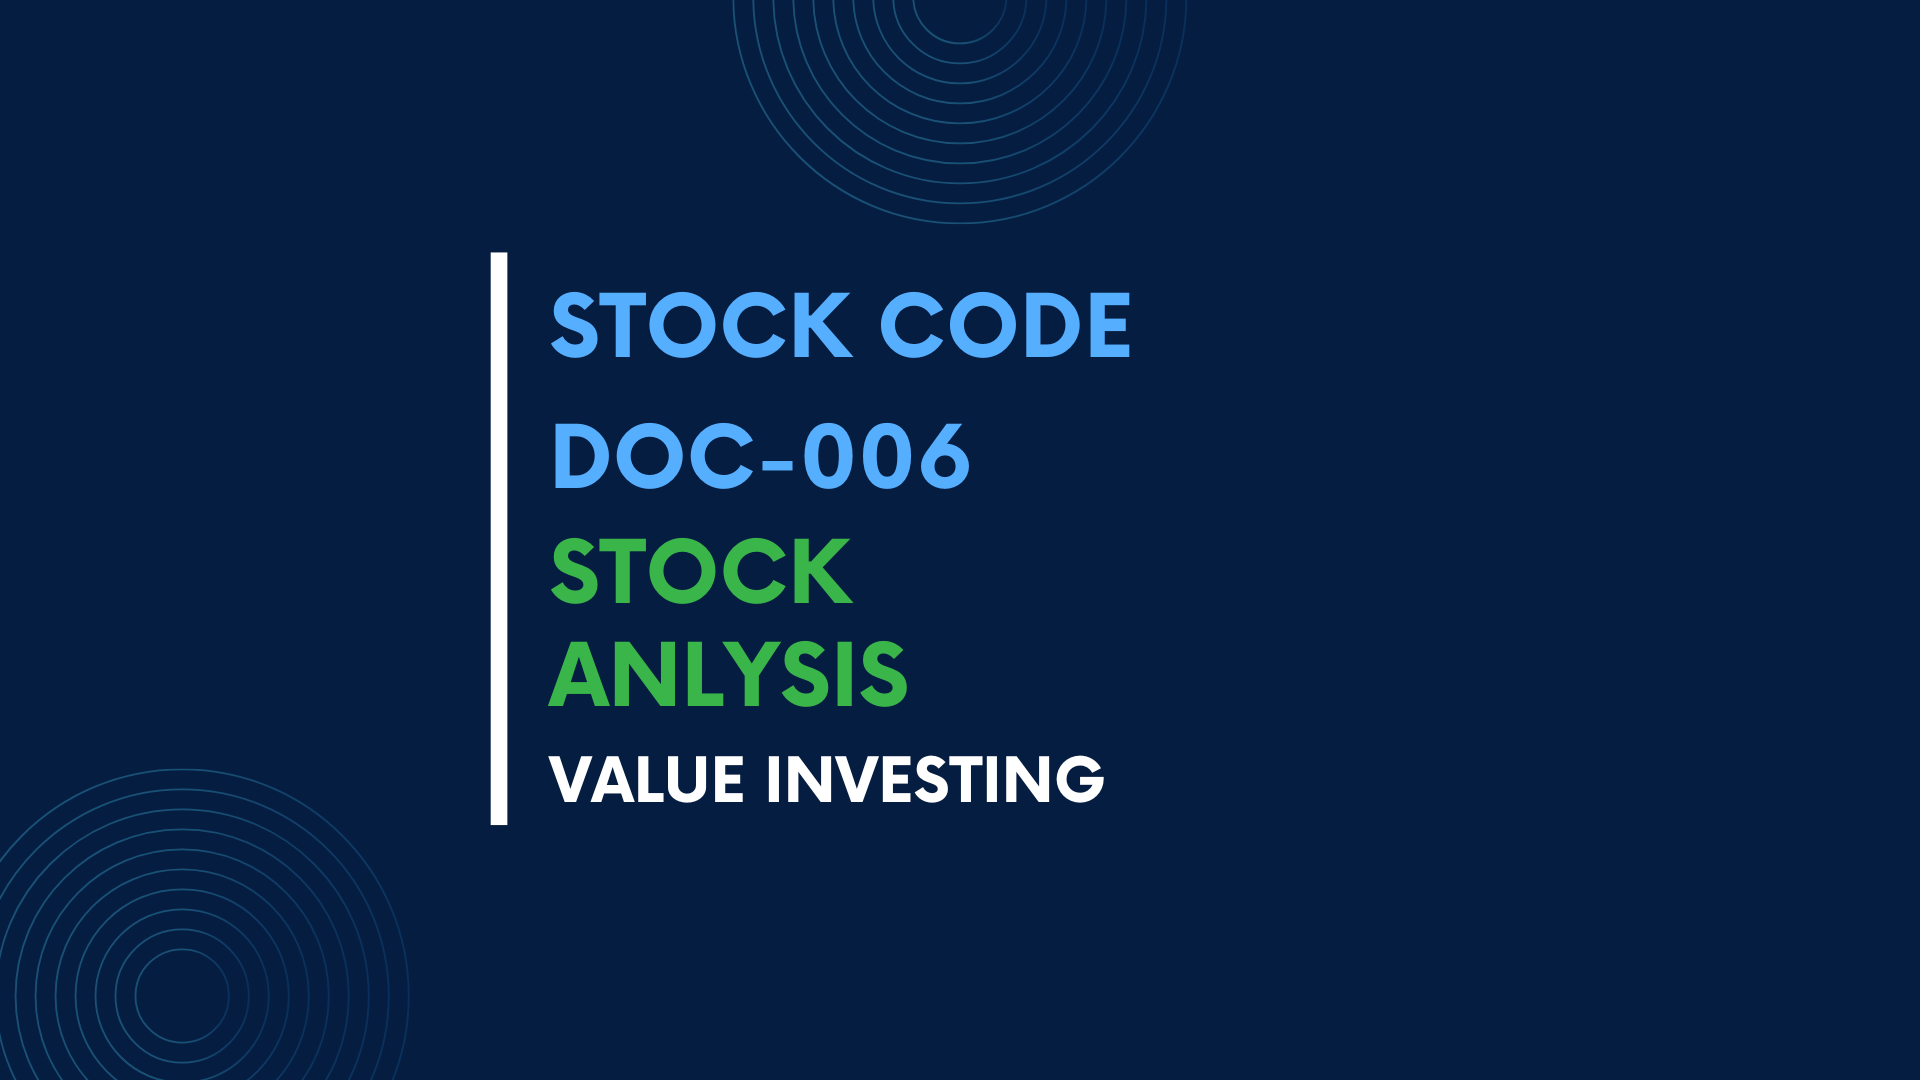 Value Investing Analysis